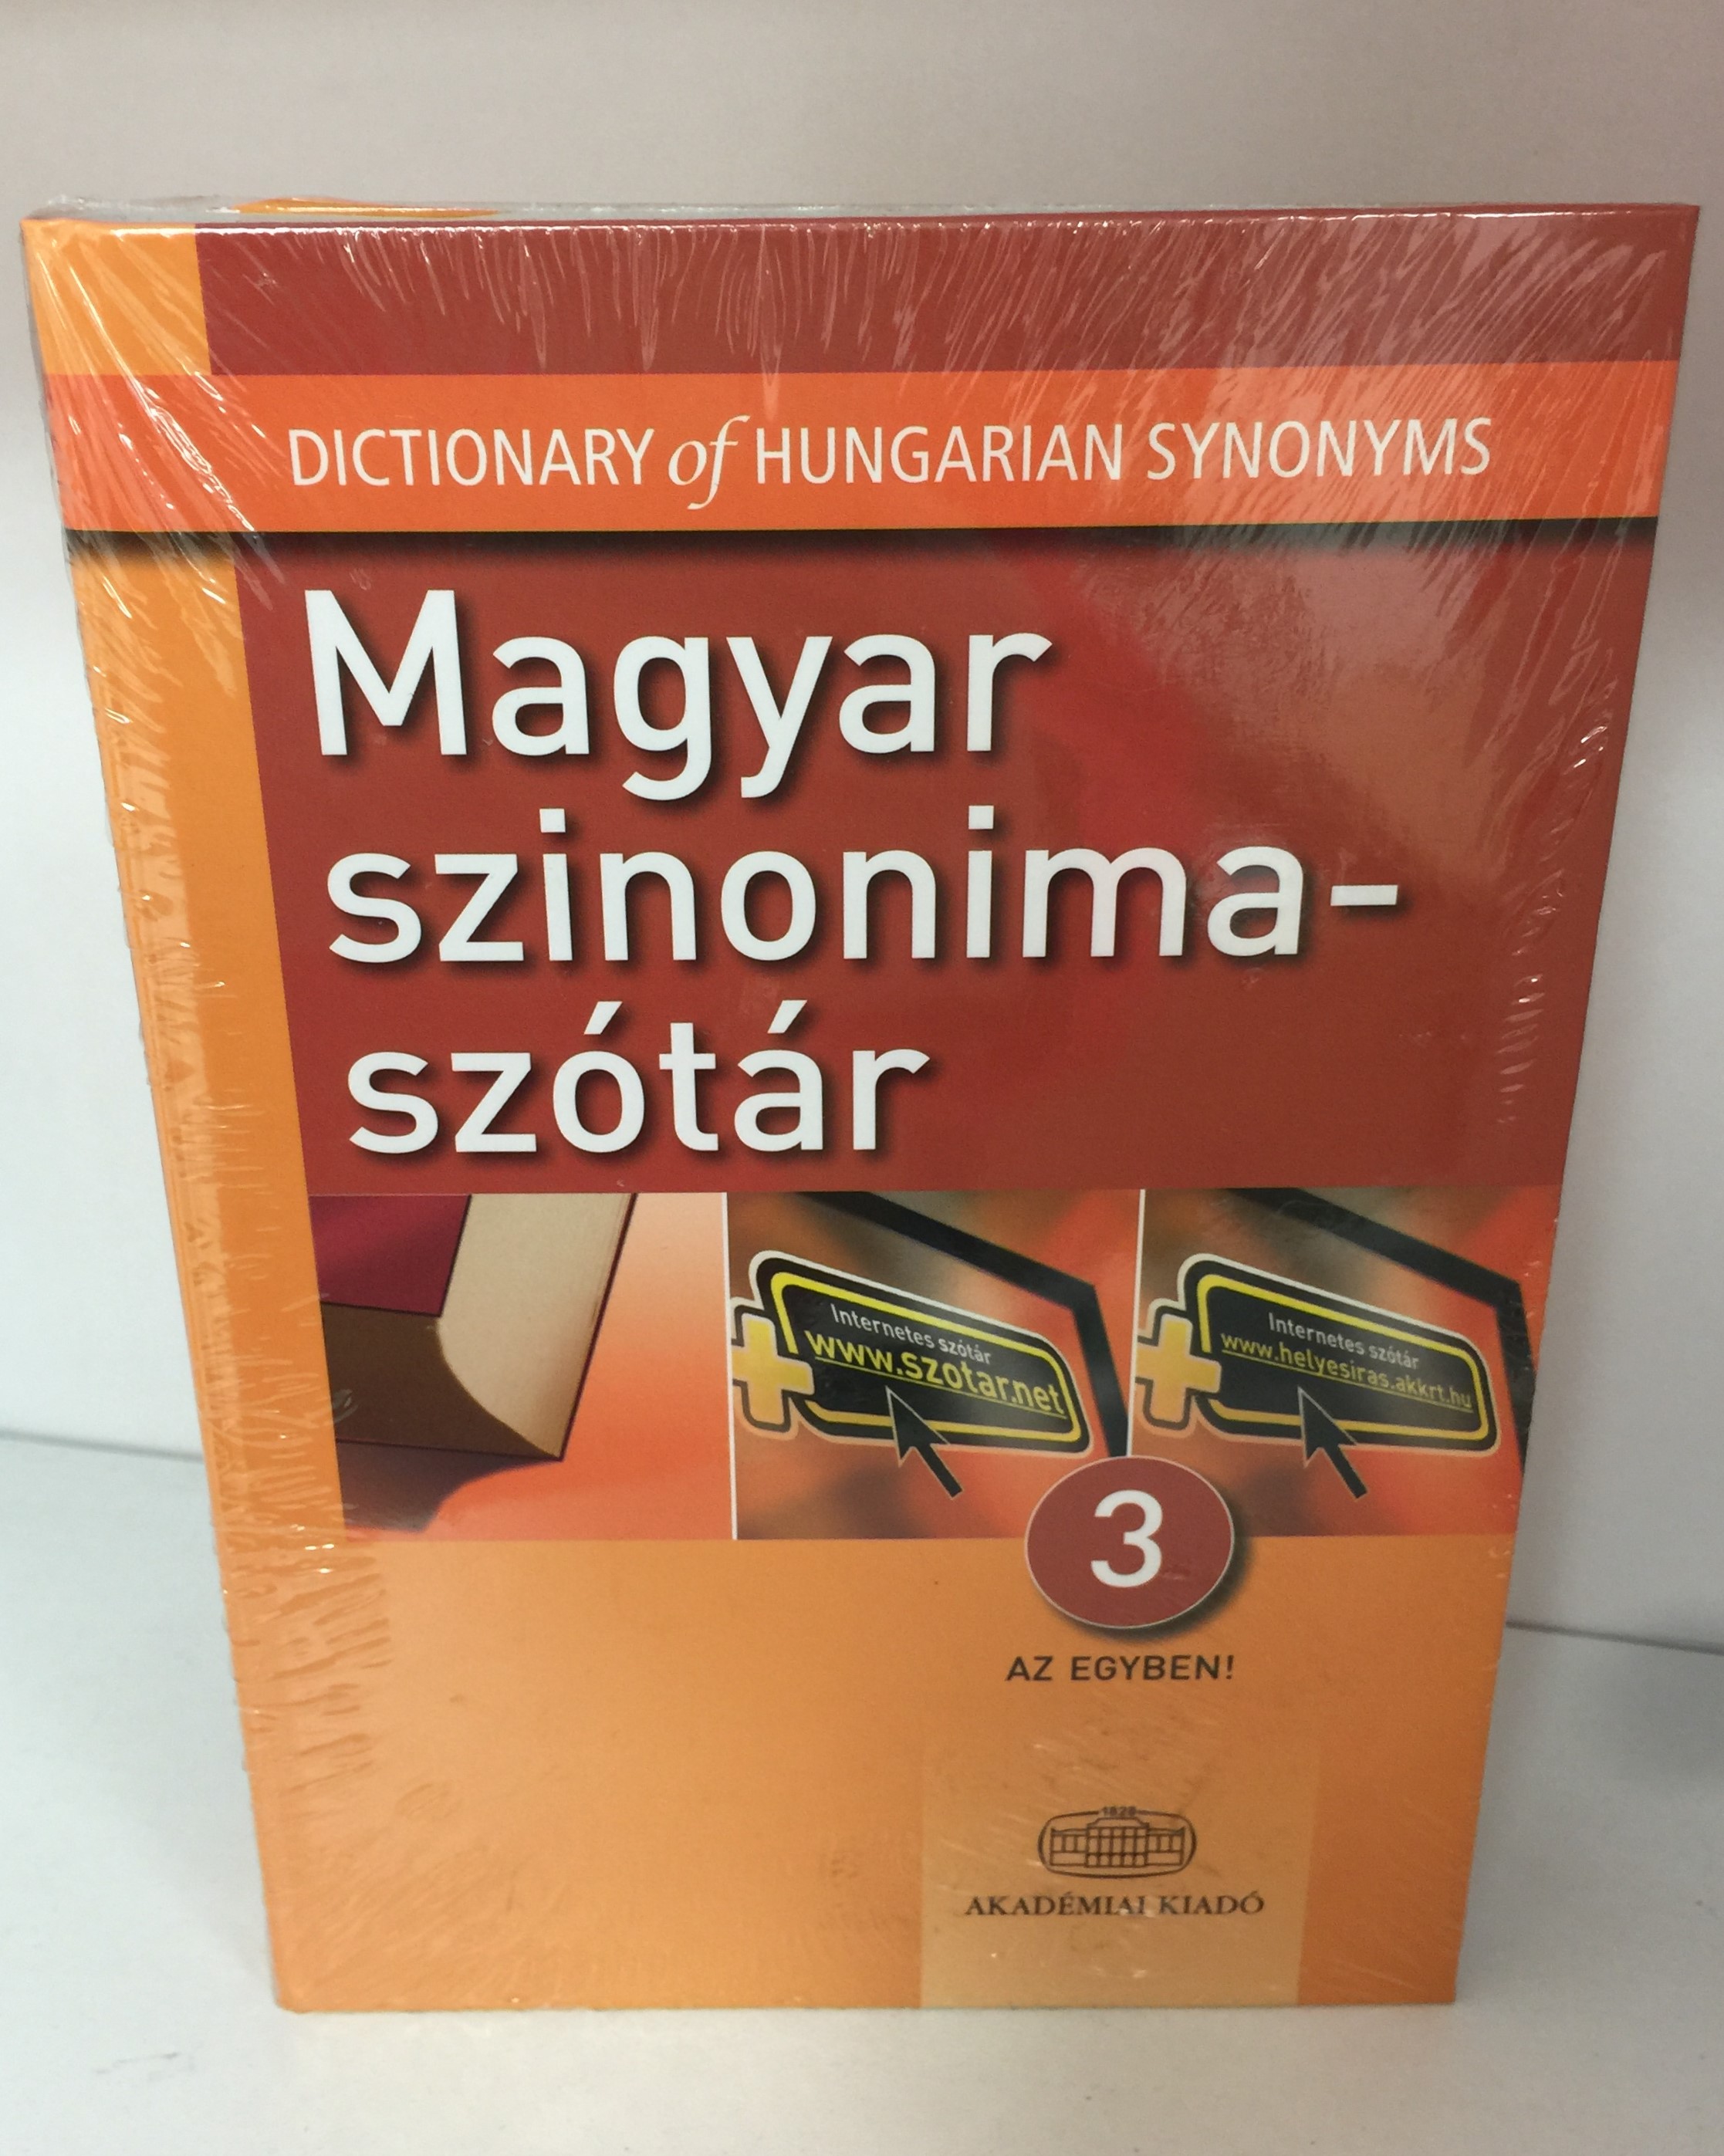 Magyar szinonima-szótár - Dictionary of Hungarian Synonyms  1